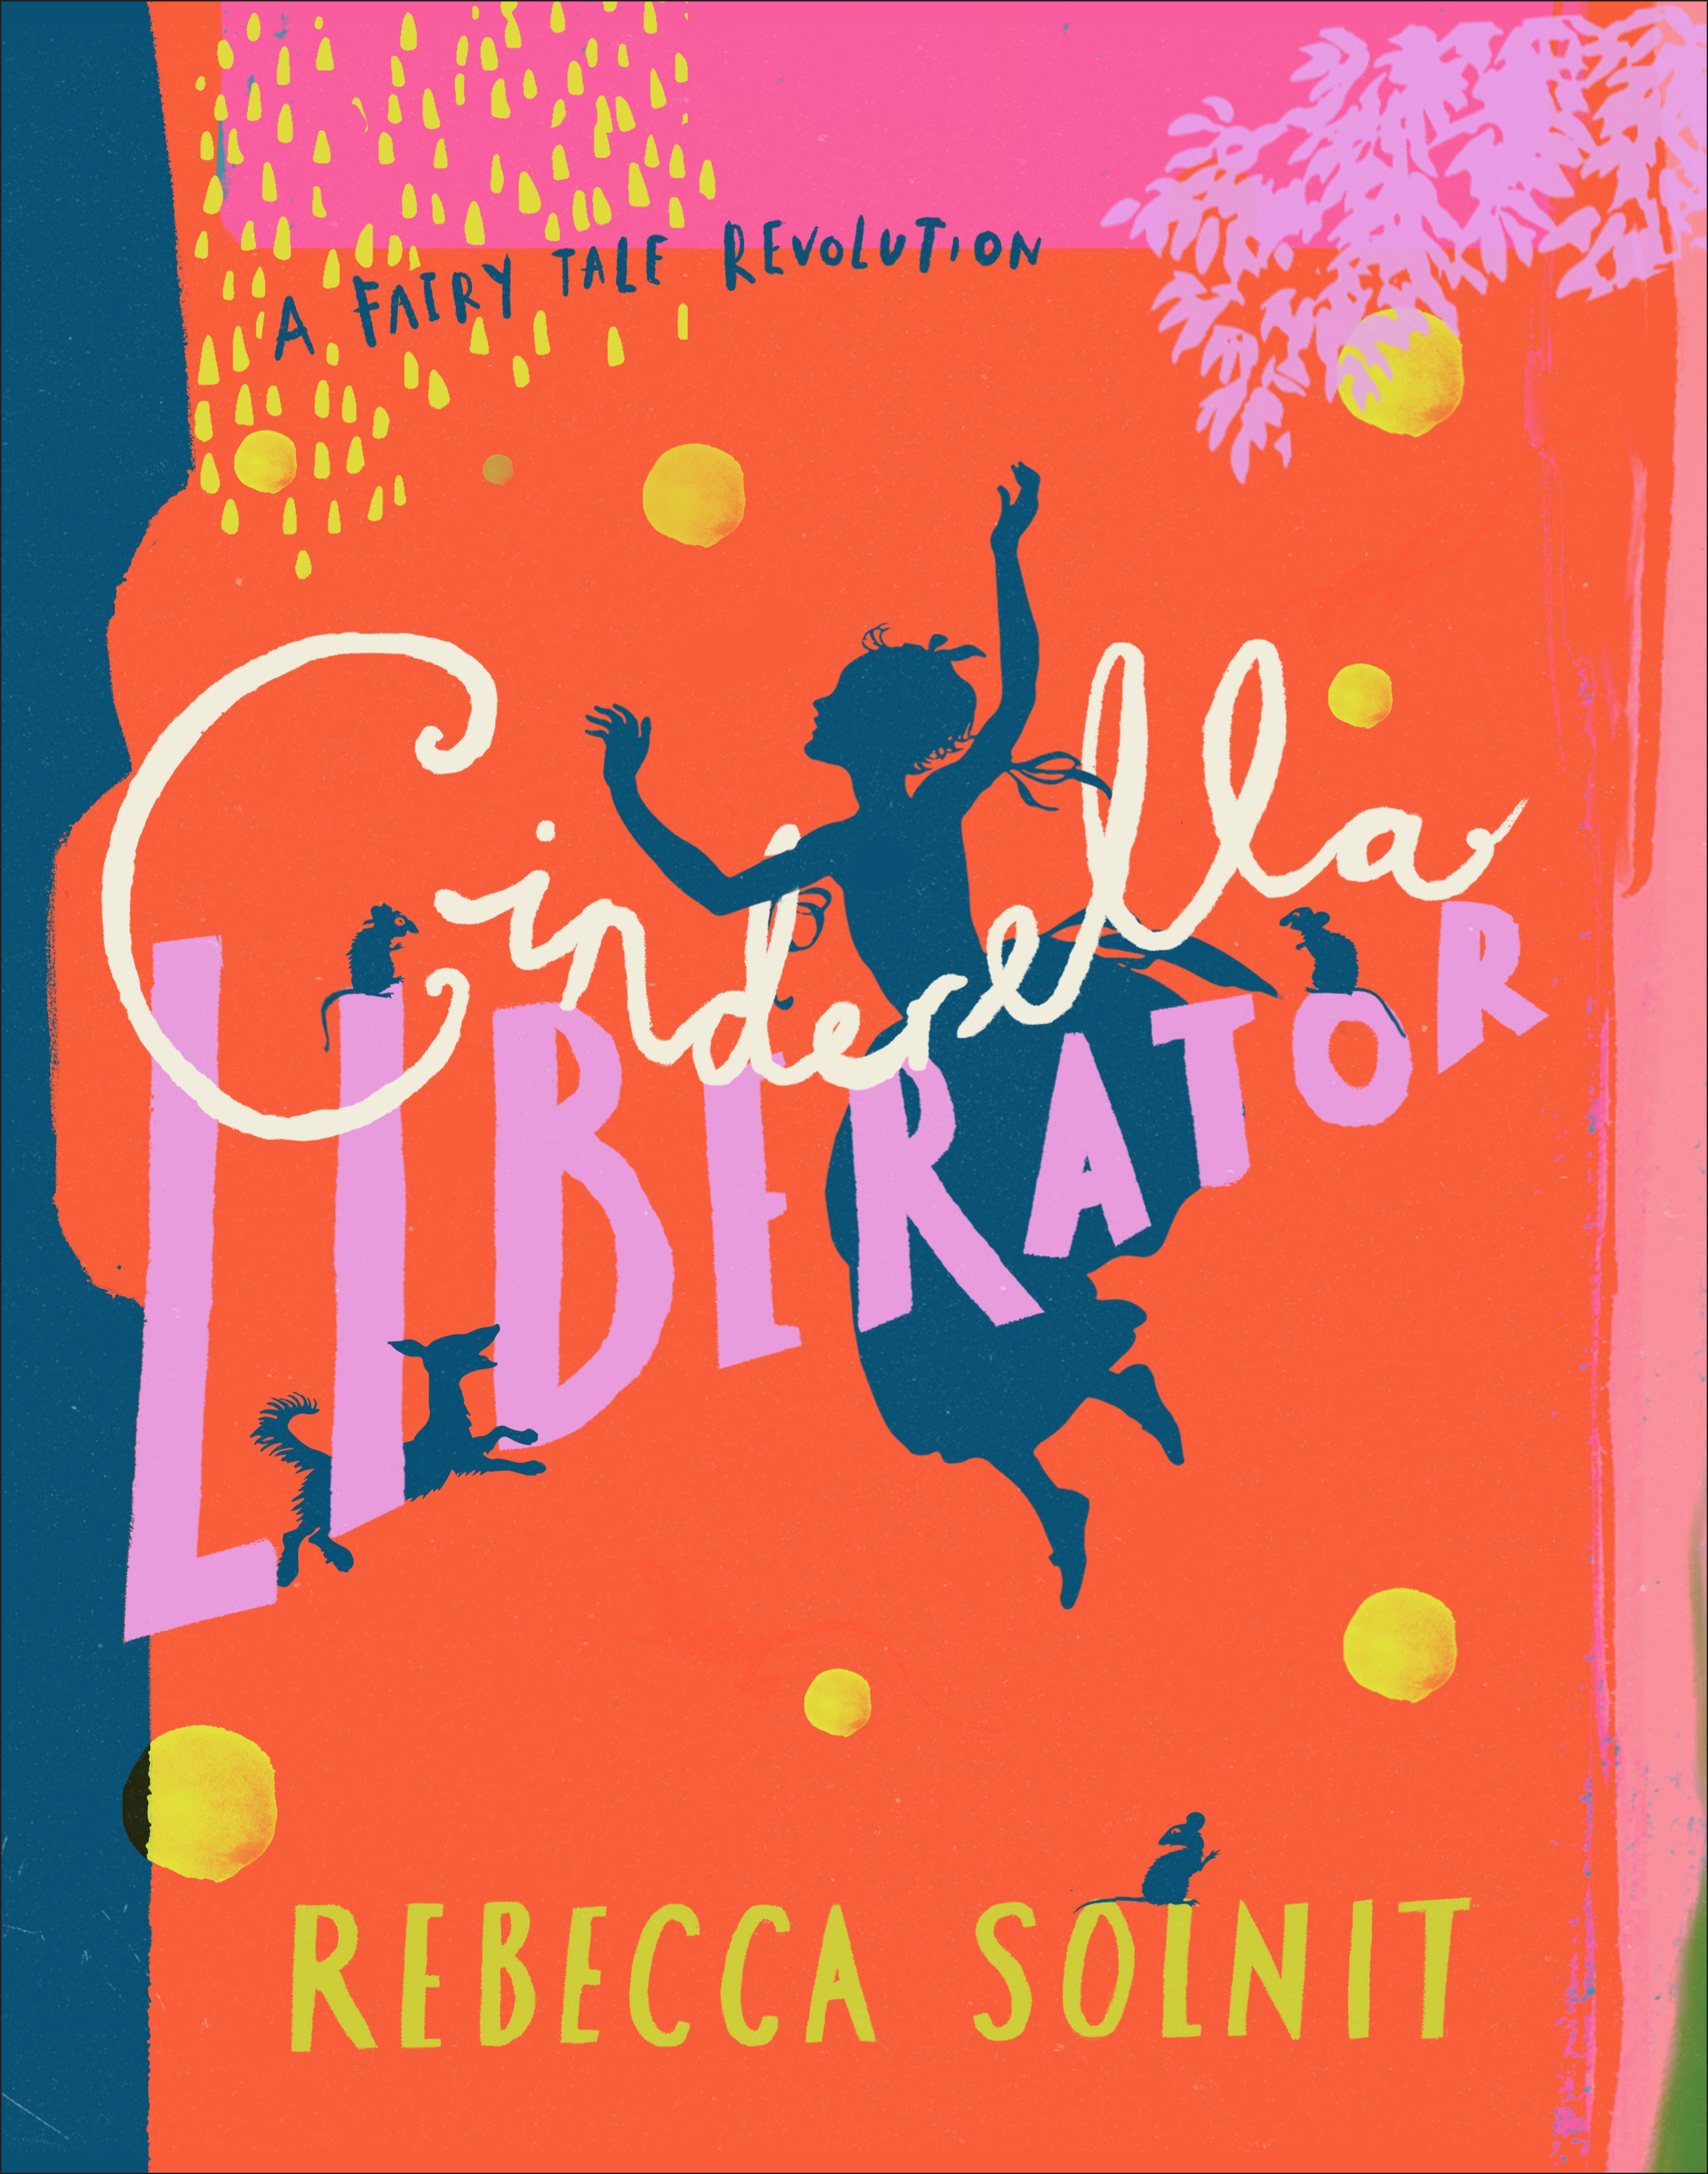 Cinderella Liberator : A Fairy Tale Revolution